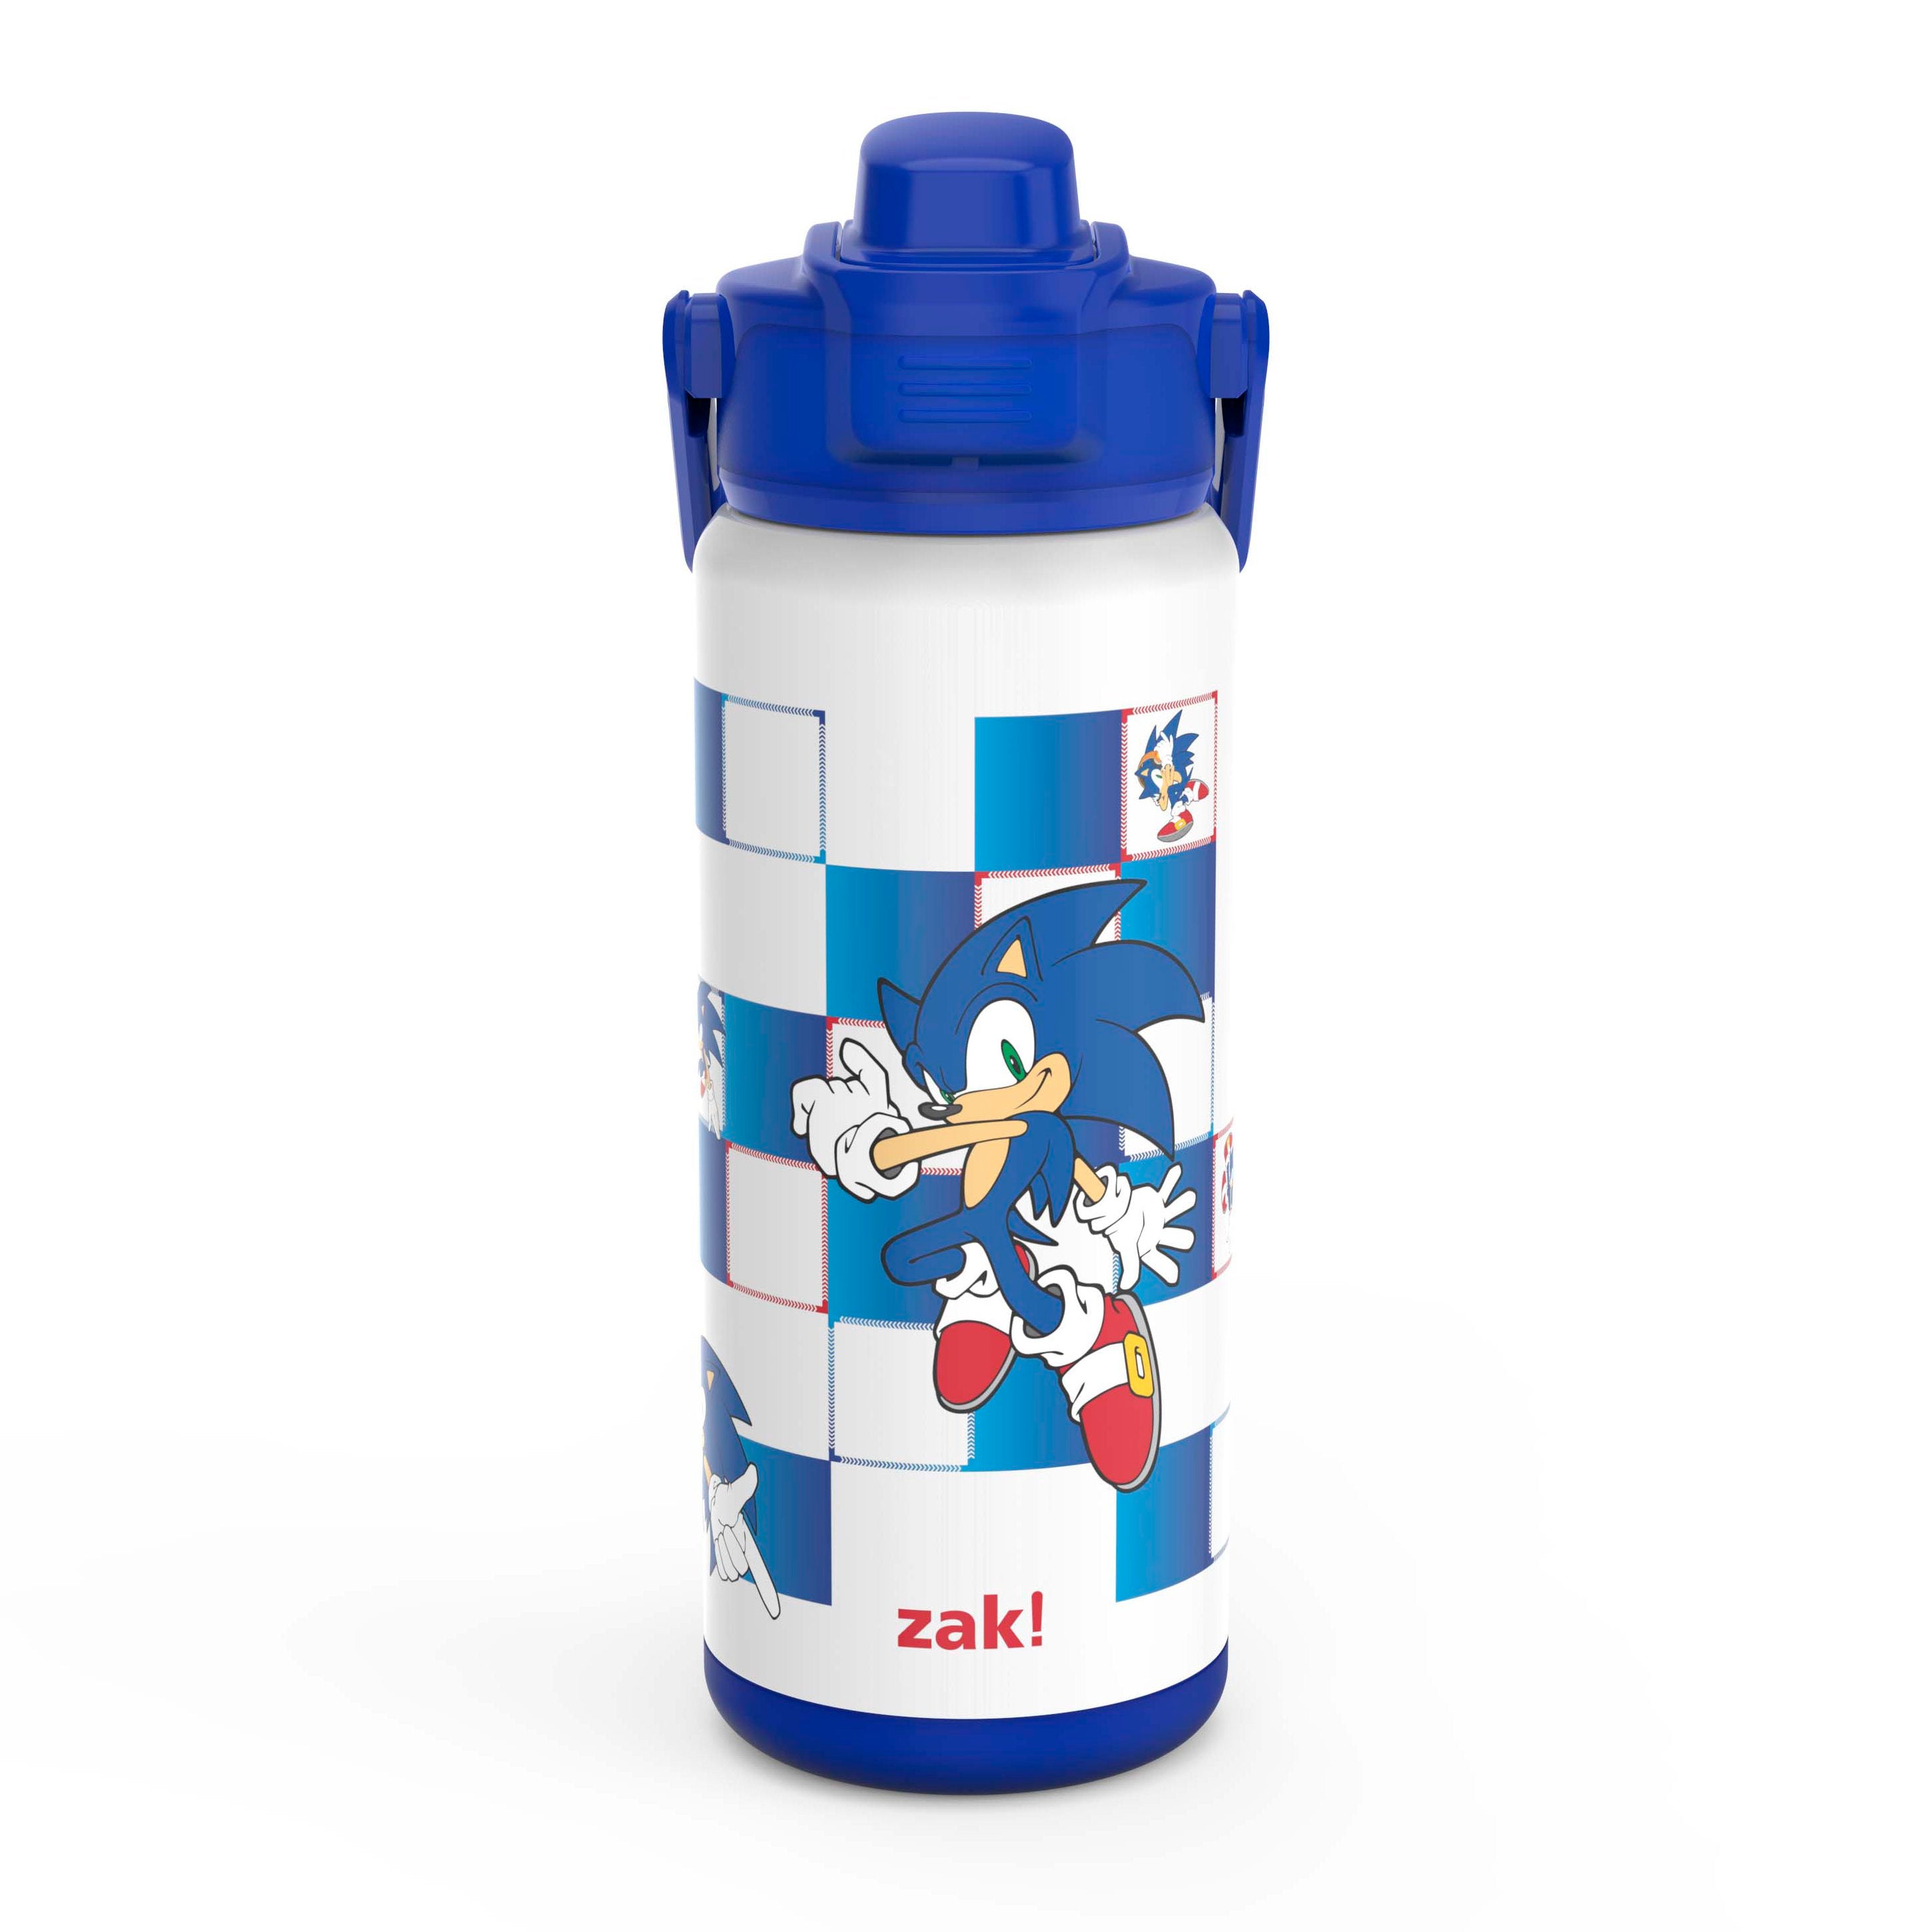 Sonic Too Slow 32oz. Water Bottle